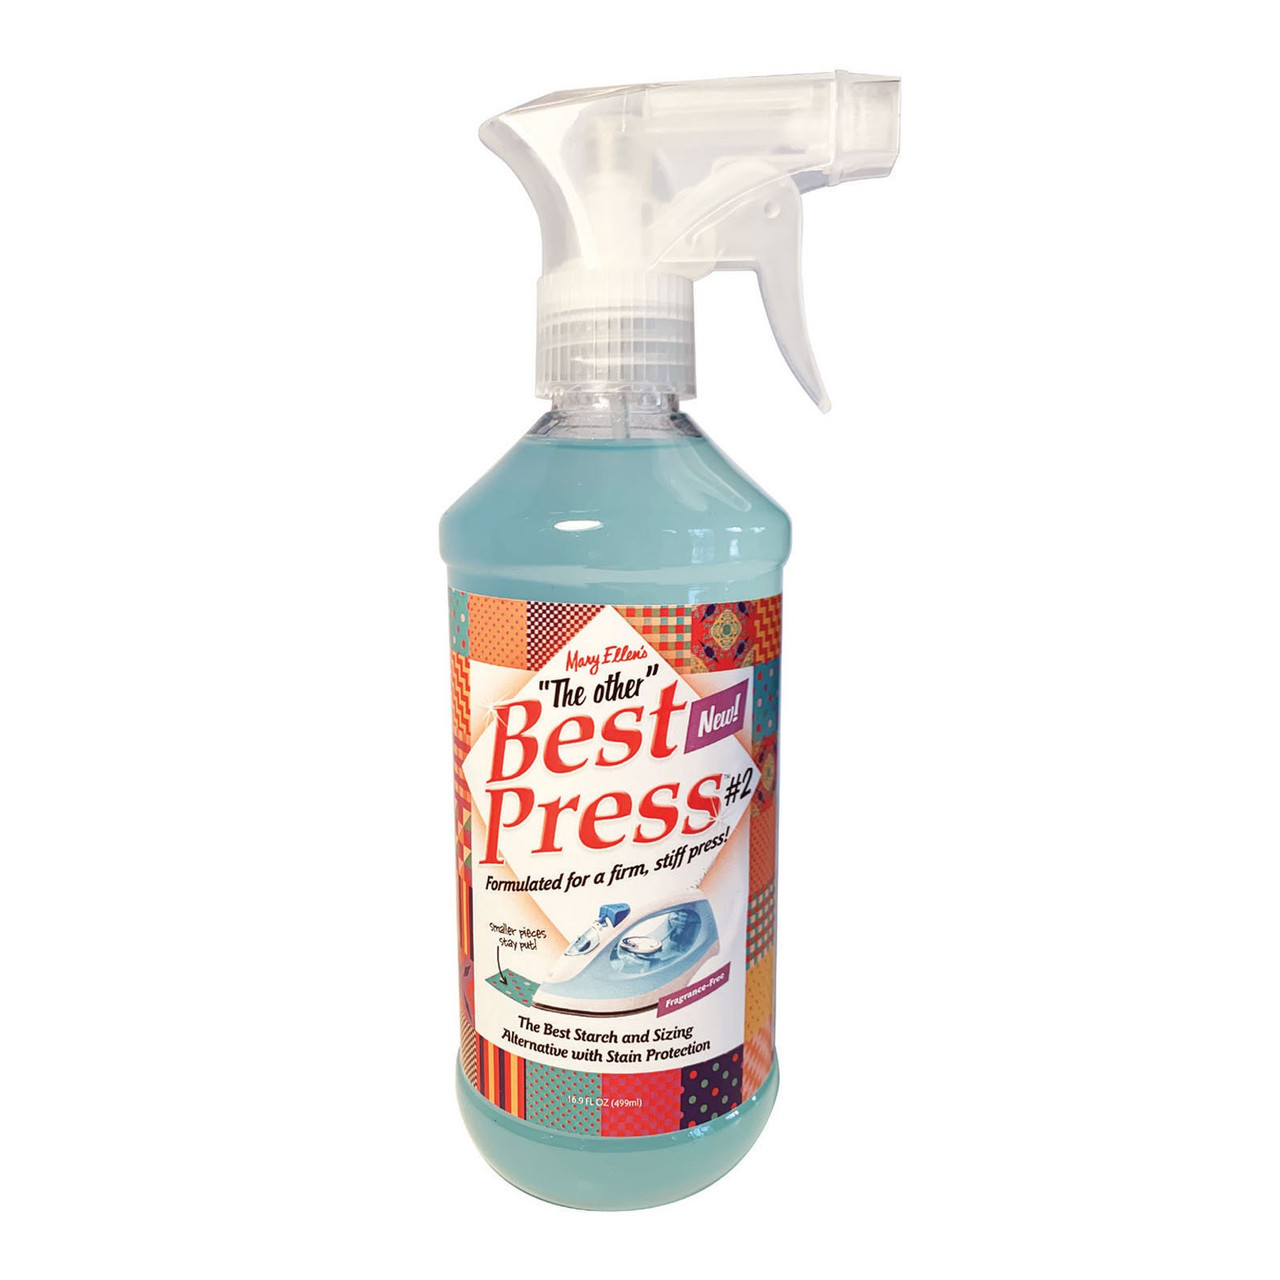 Best Press Spray Starch Scent Free 6oz